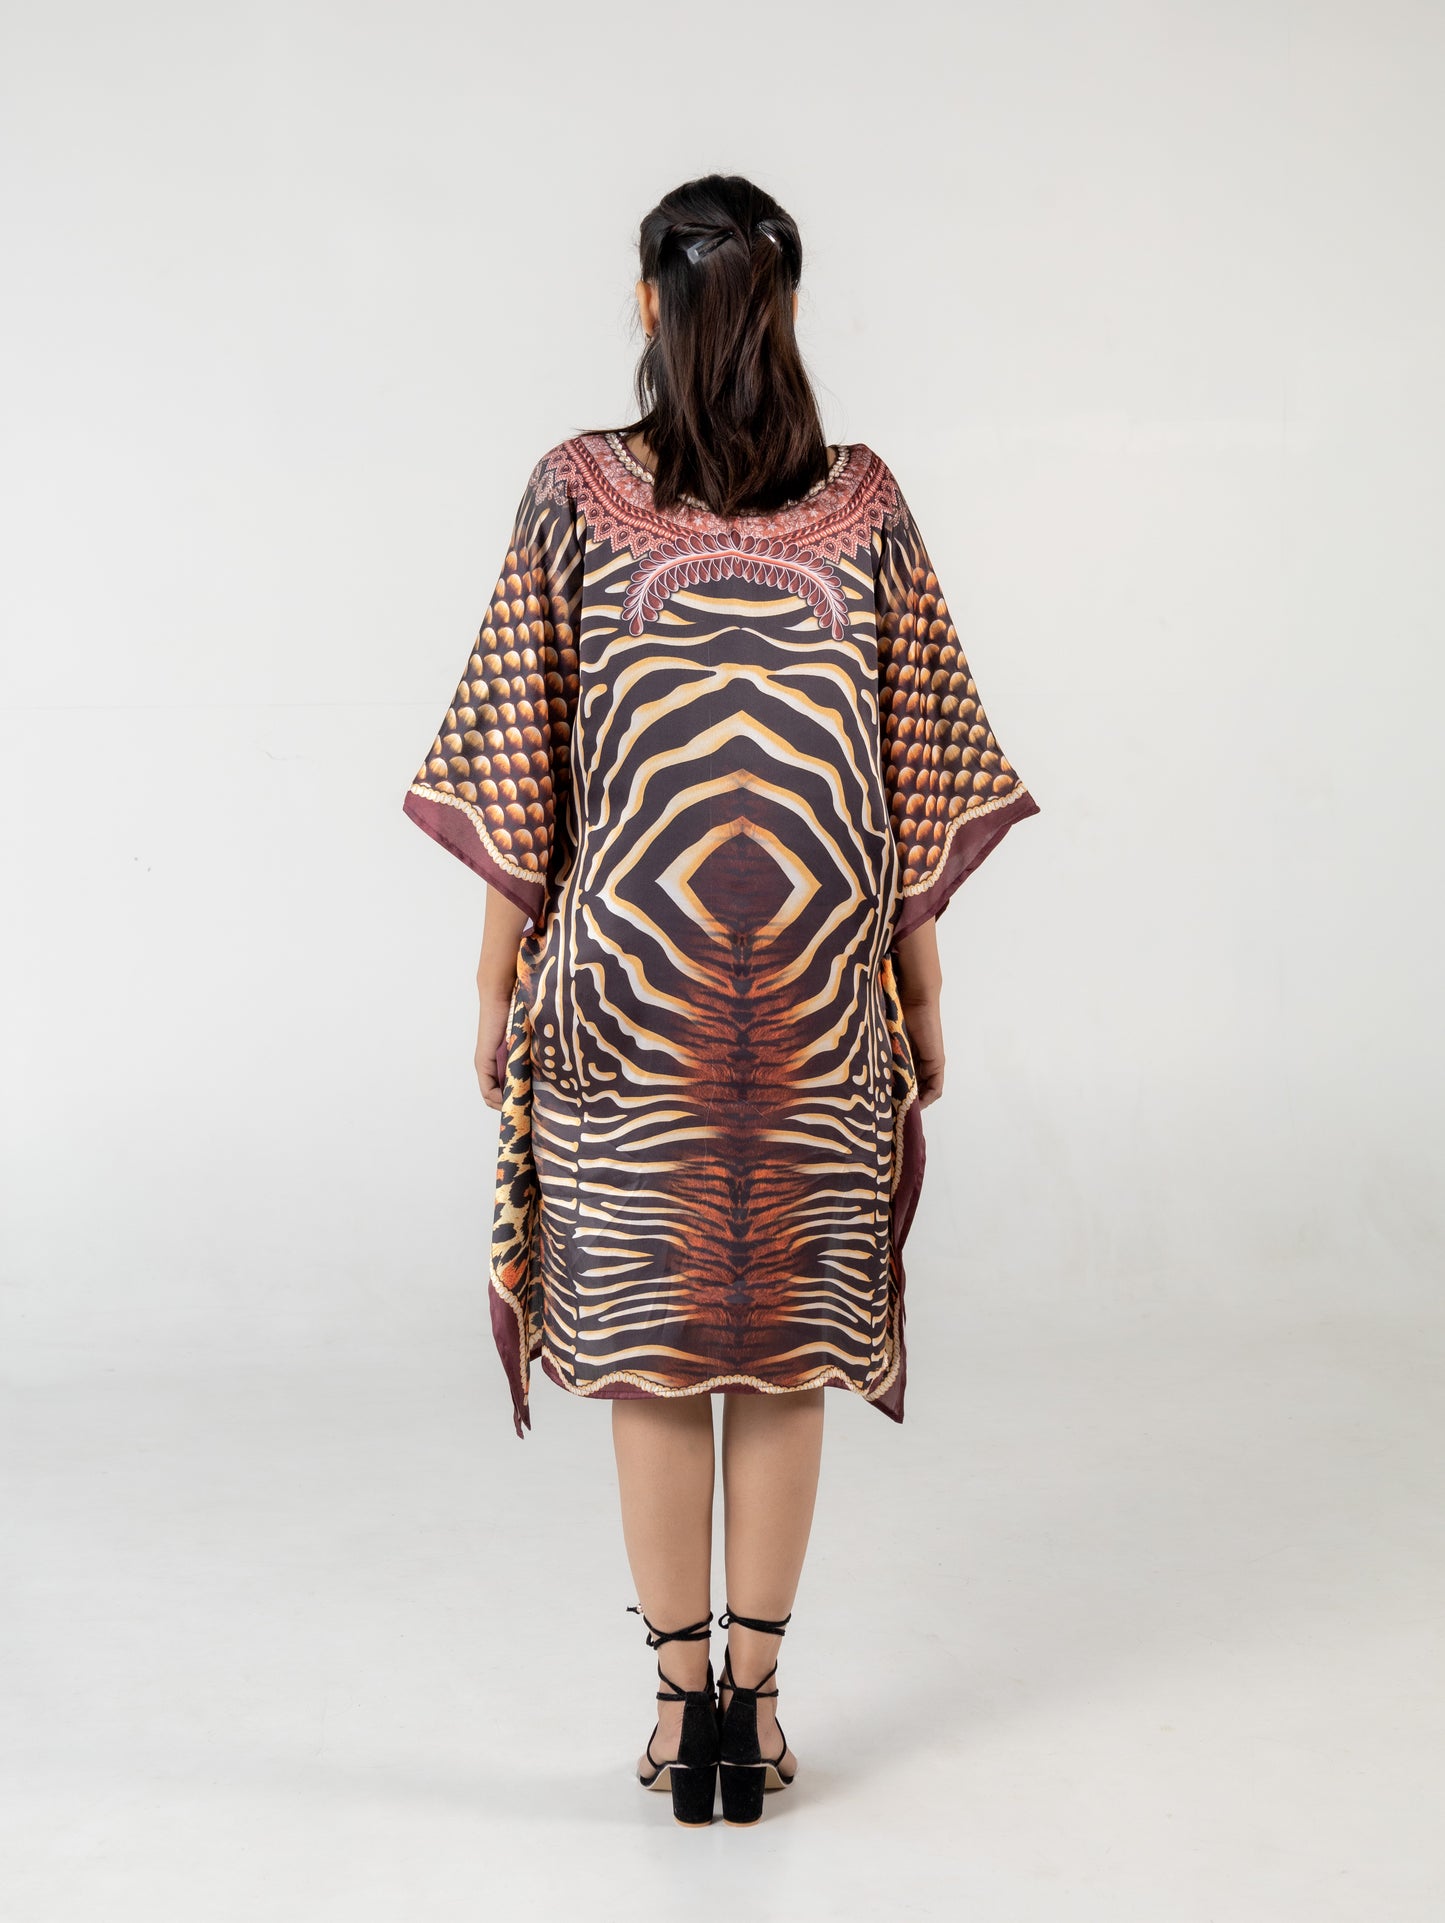 Tiger Print Kaftan Dresses for Women Short Kaftan